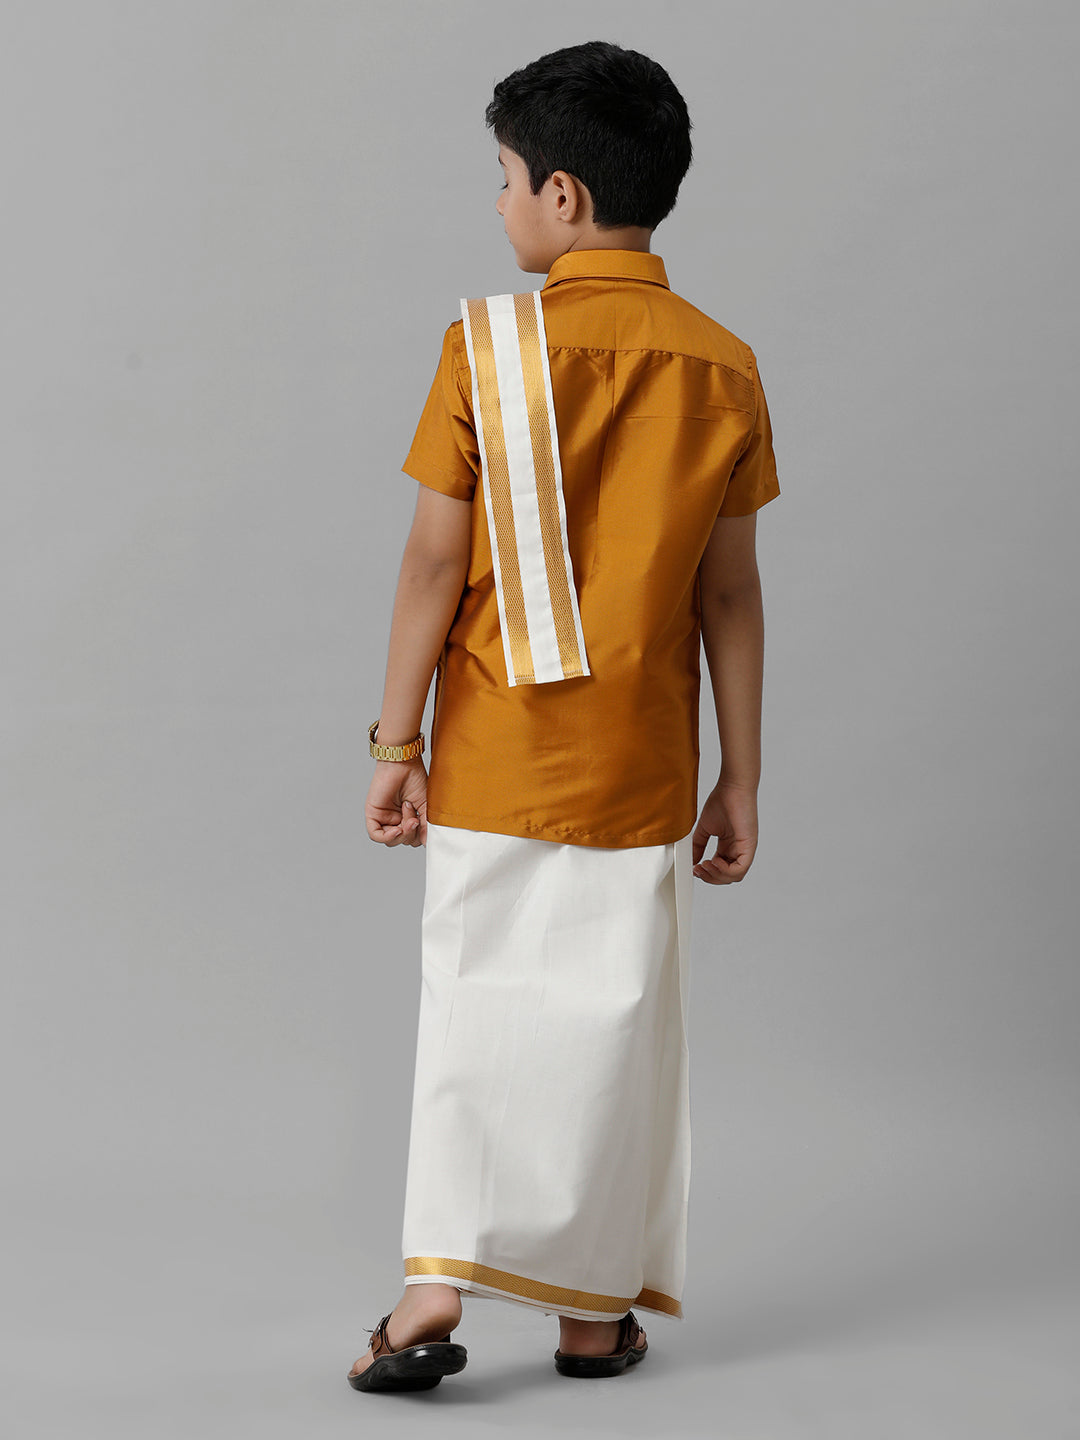 Boys Silk Cotton Mustard Half Sleeves Shirt with Adjustable Cream Dhoti Towel Combo K37-Back view